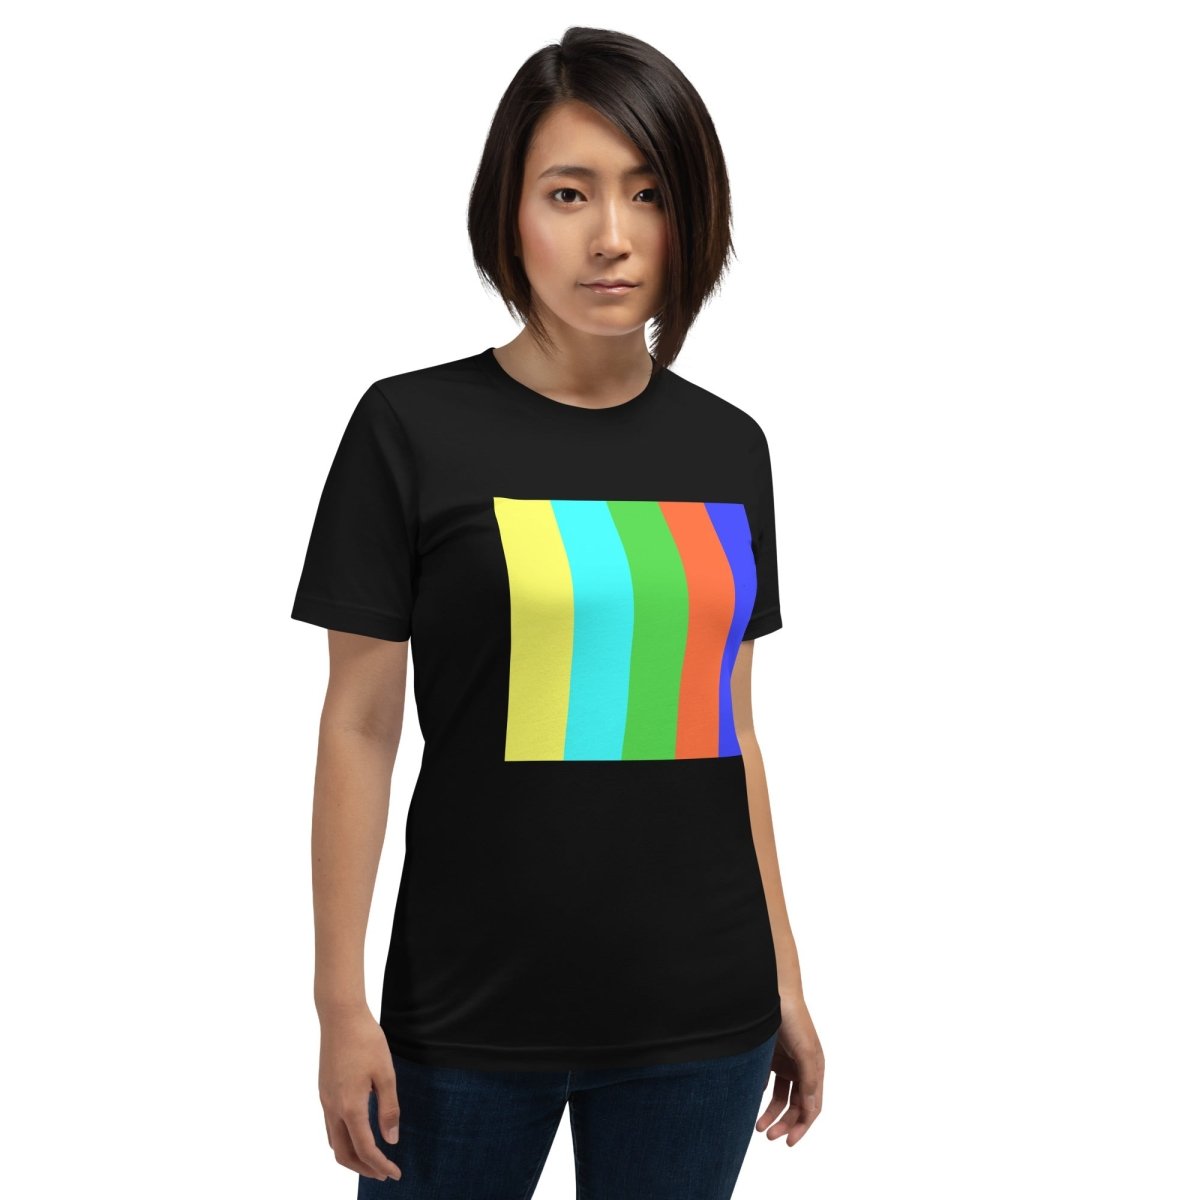 DALL - E 2 Square Watermark T - Shirt (unisex) - Black - AI Store